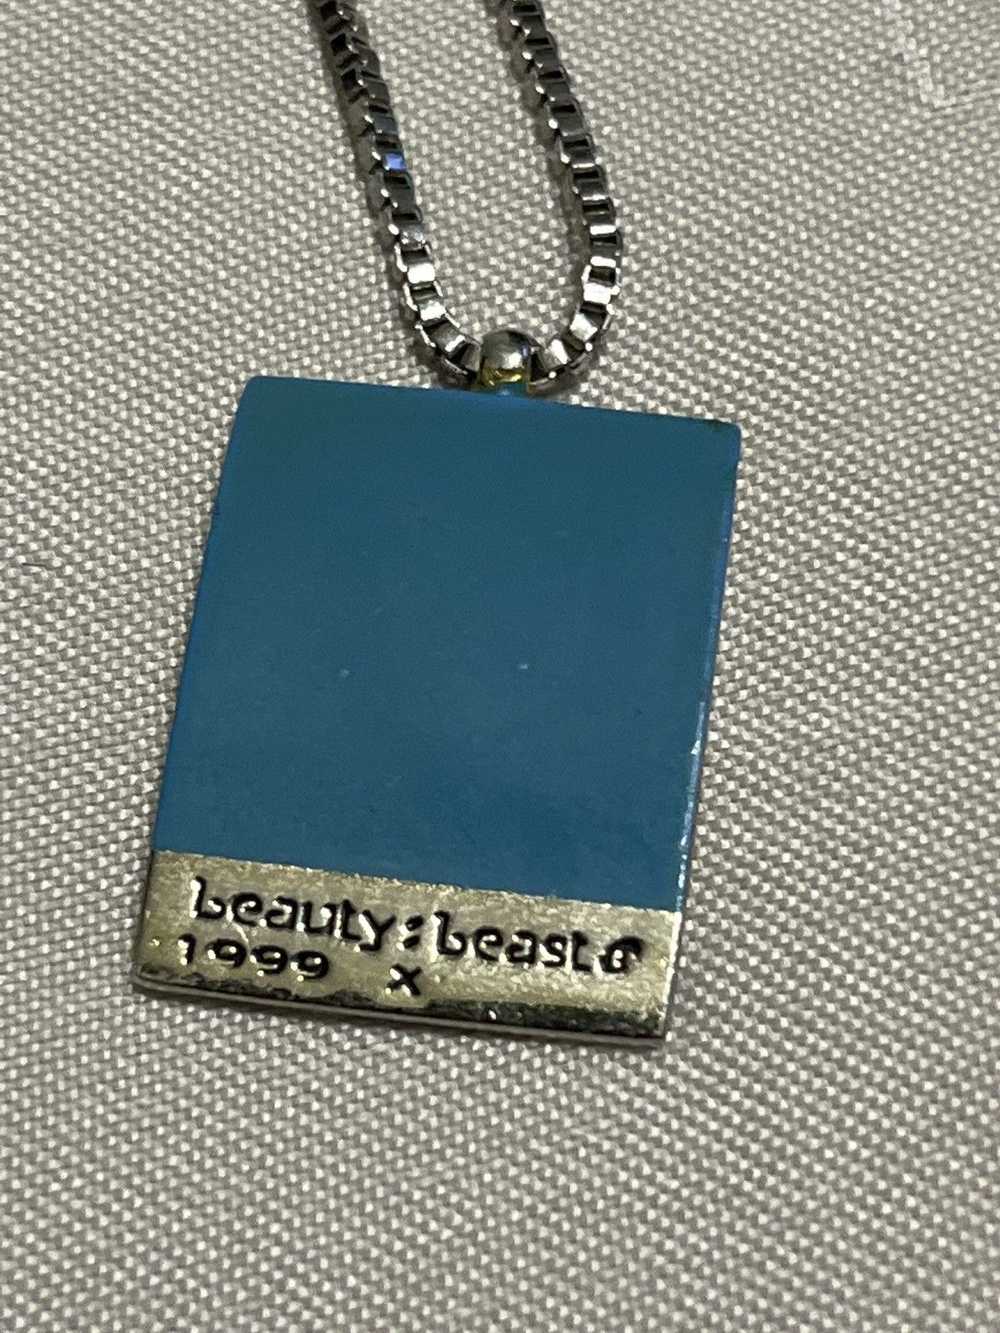 Beauty Beast Beauty:Beast 1999 necklace - image 3